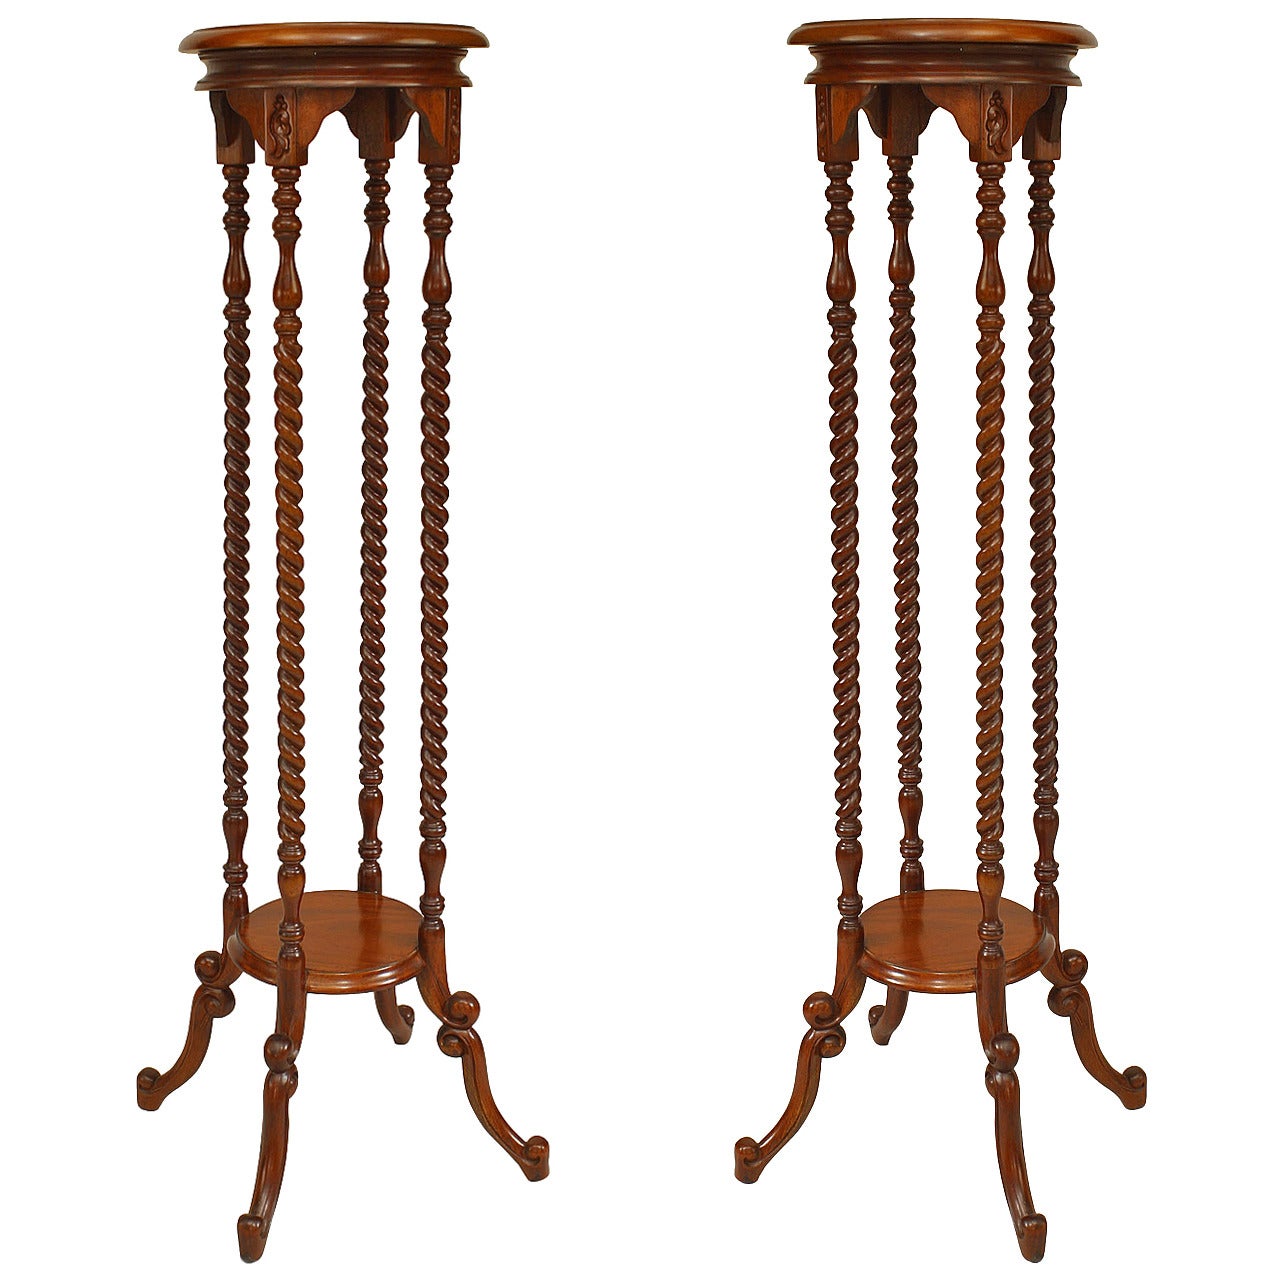 Pair of 19th Century English Swirl Design Pedestals